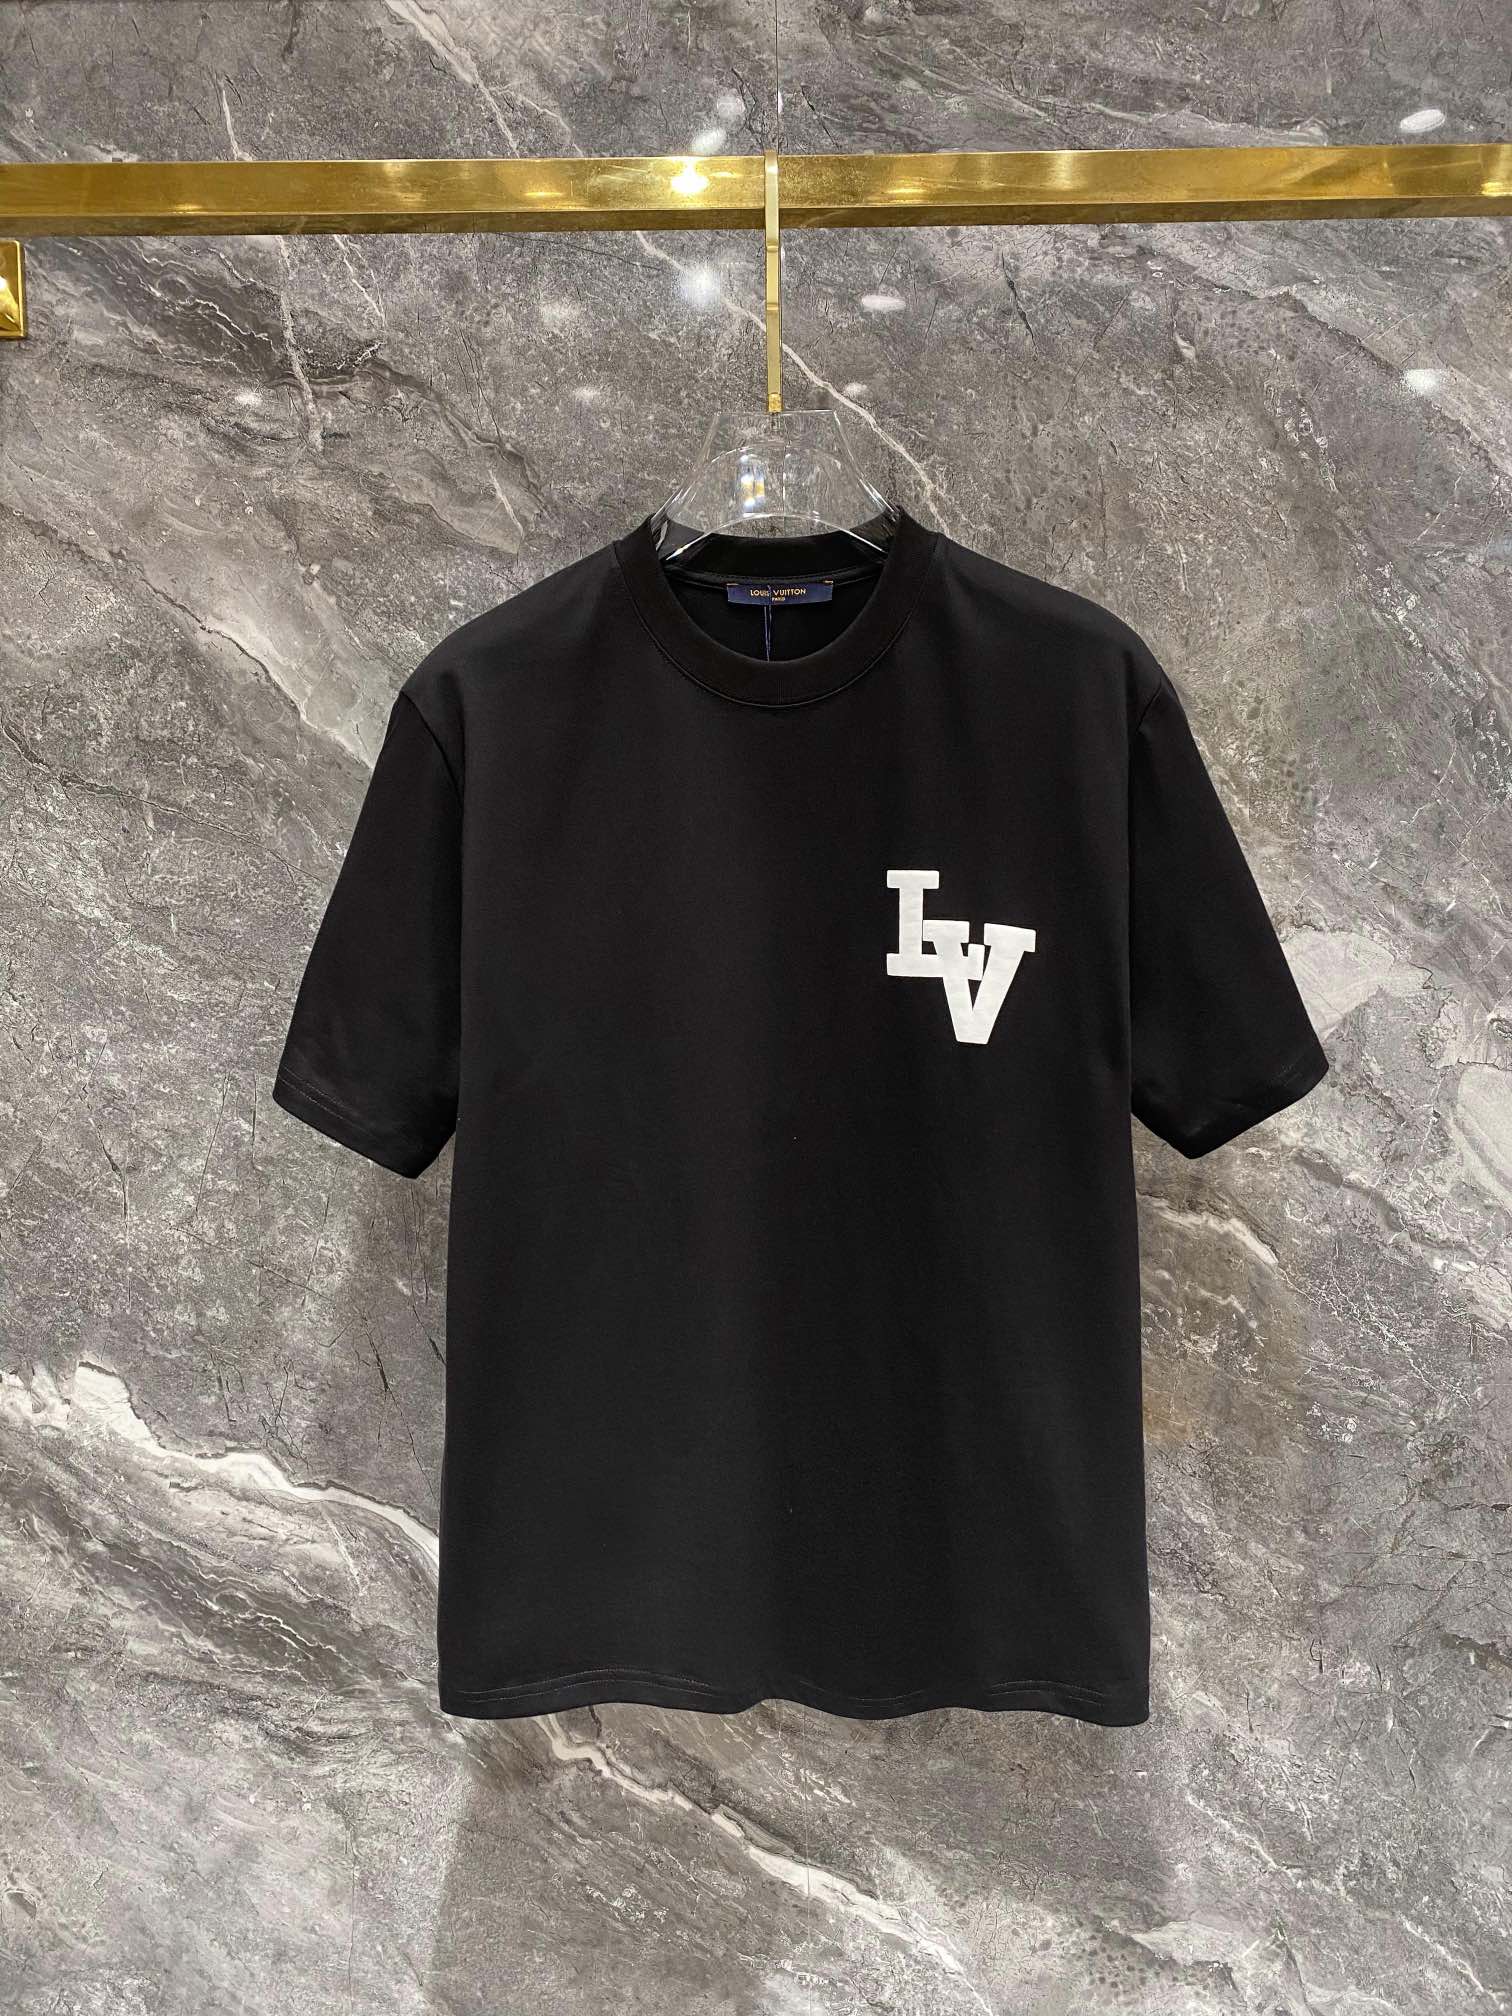 Louis Vuitton Clothing T-Shirt Black White Cotton Fashion Short Sleeve